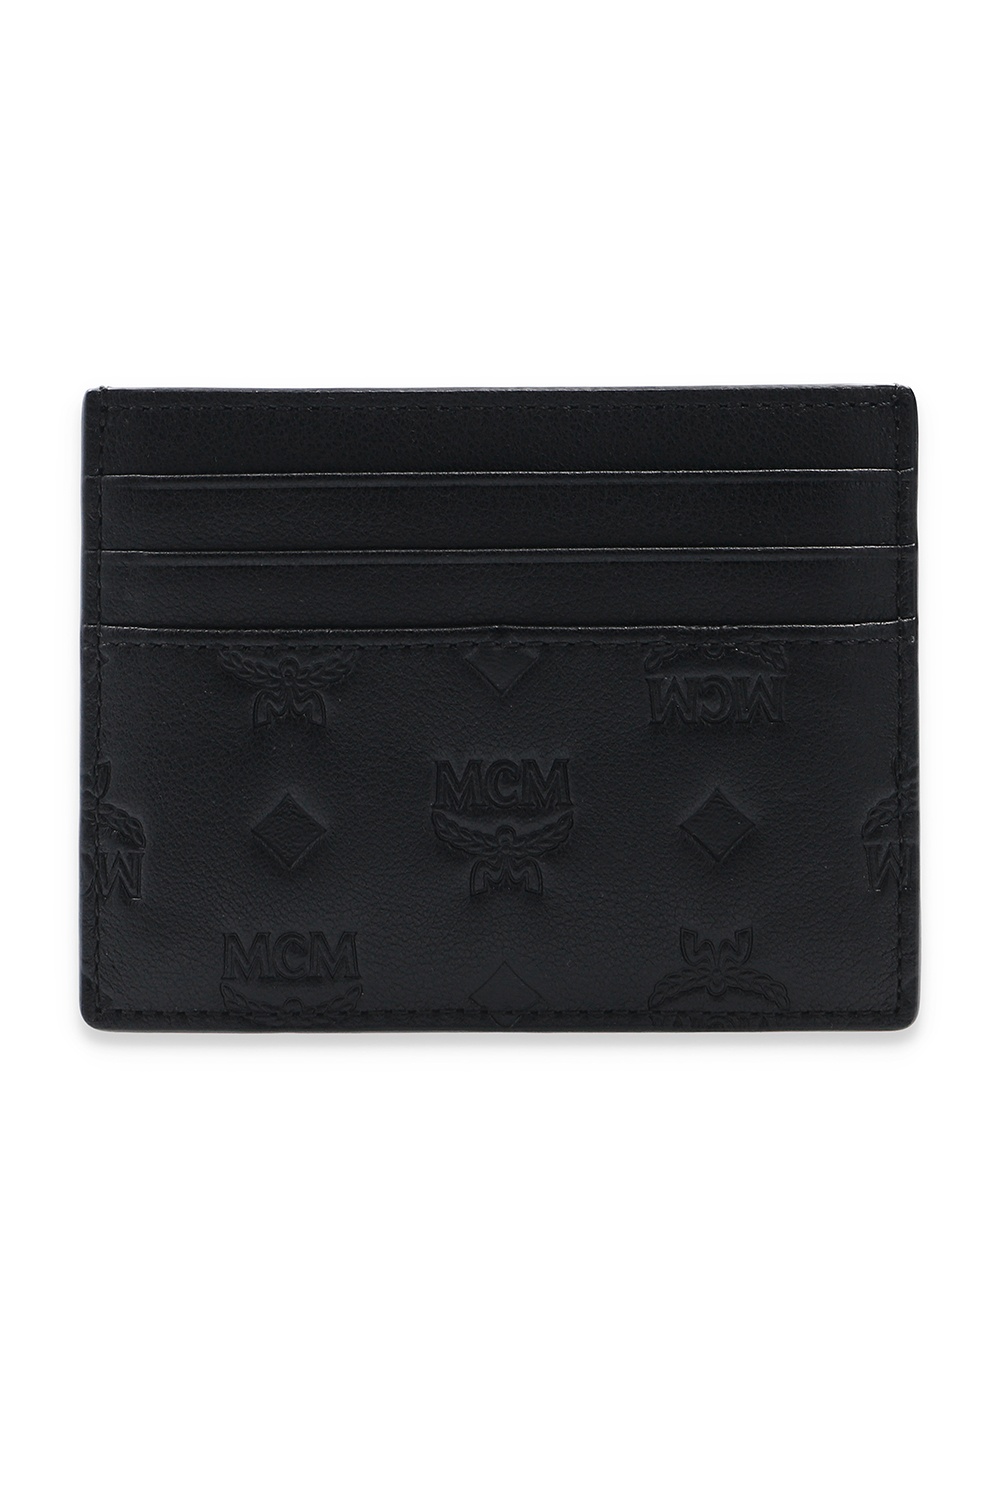 MCM Monogrammed Leather Money Clip Card Case Wallet